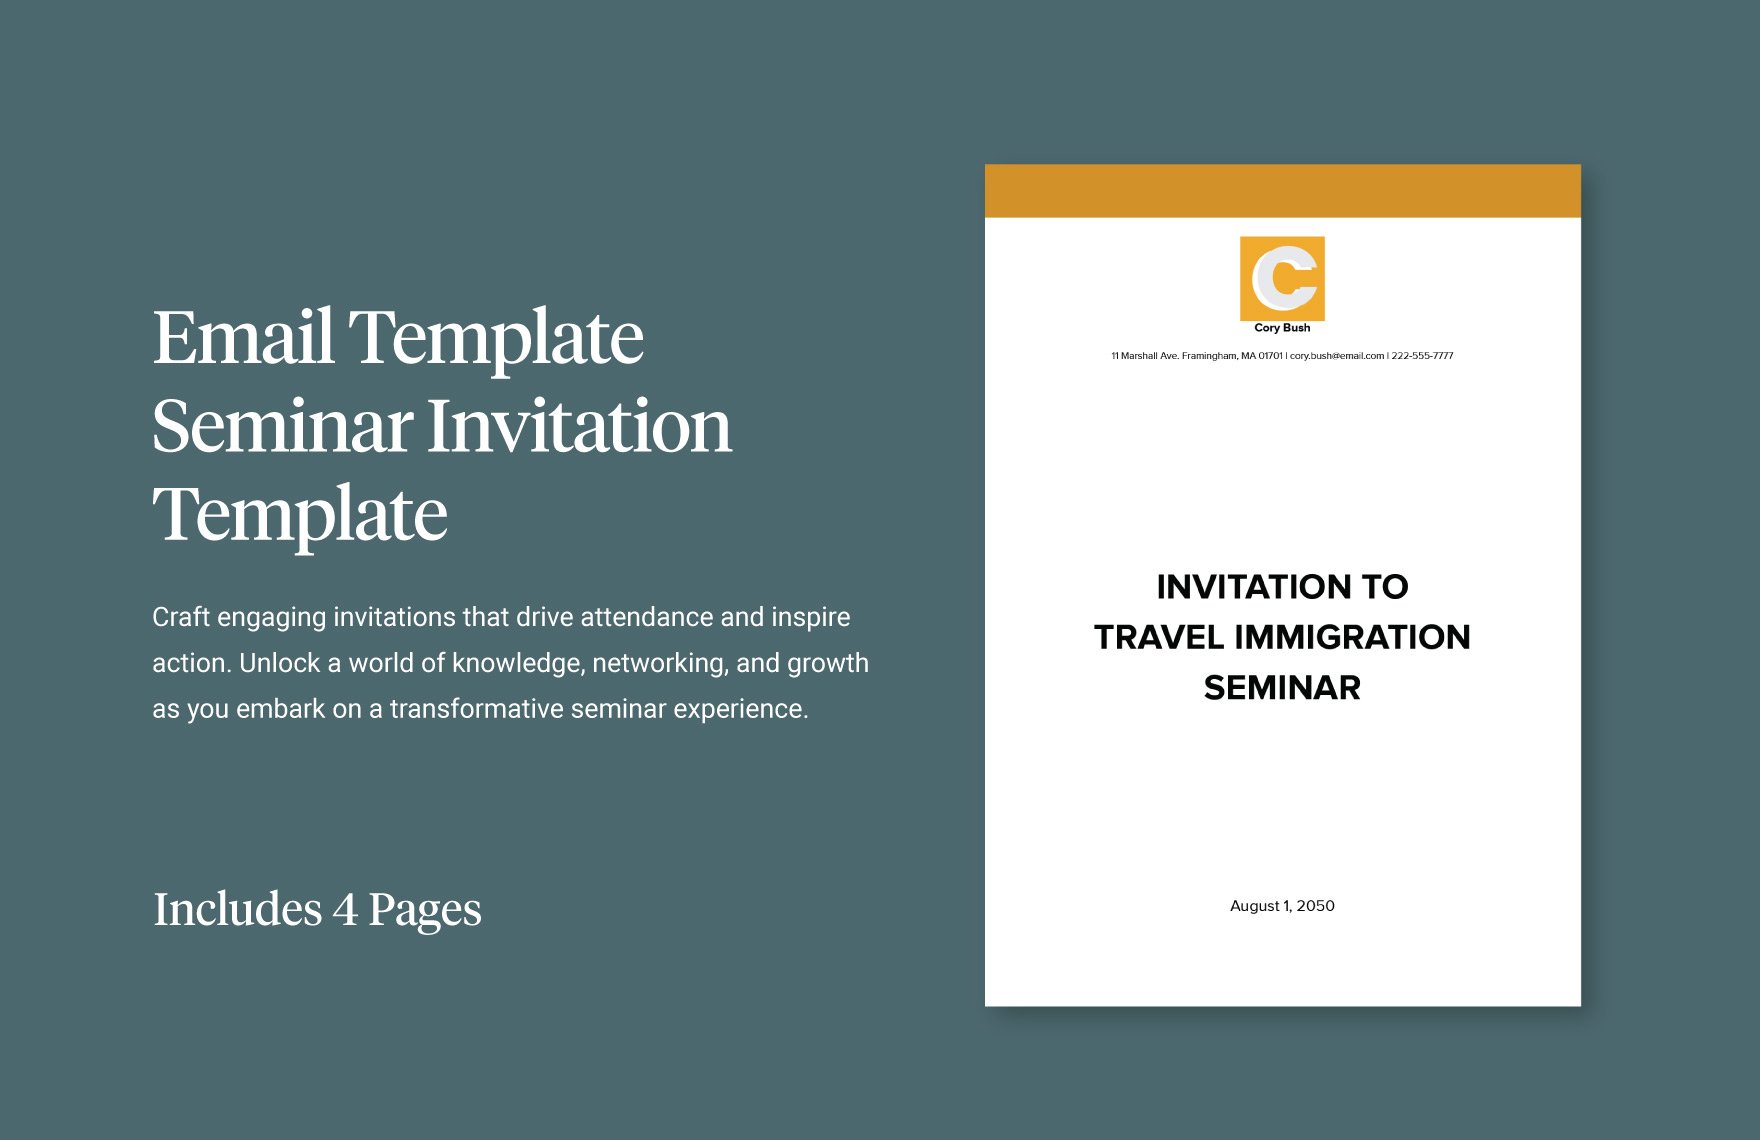 Email Template Seminar Invitation Template